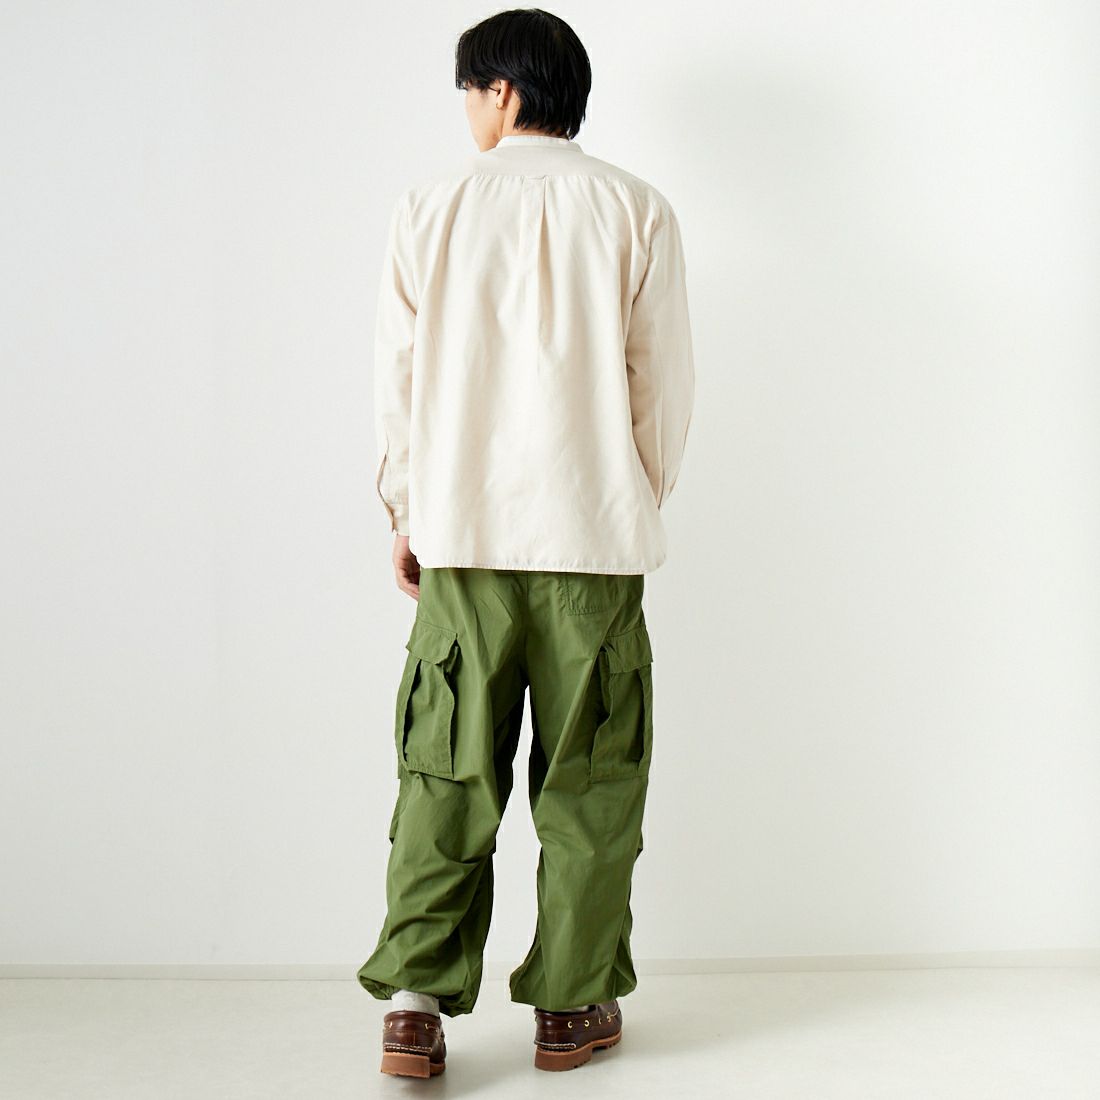 Jeans Factory Clothes [ジーンズファクトリークローズ] ロングスリーブ テックリネンバンドカラーシャツ [EPC-41100] 1 O.WHITE &&モデル身長：179cm 着用サイズ：M&&